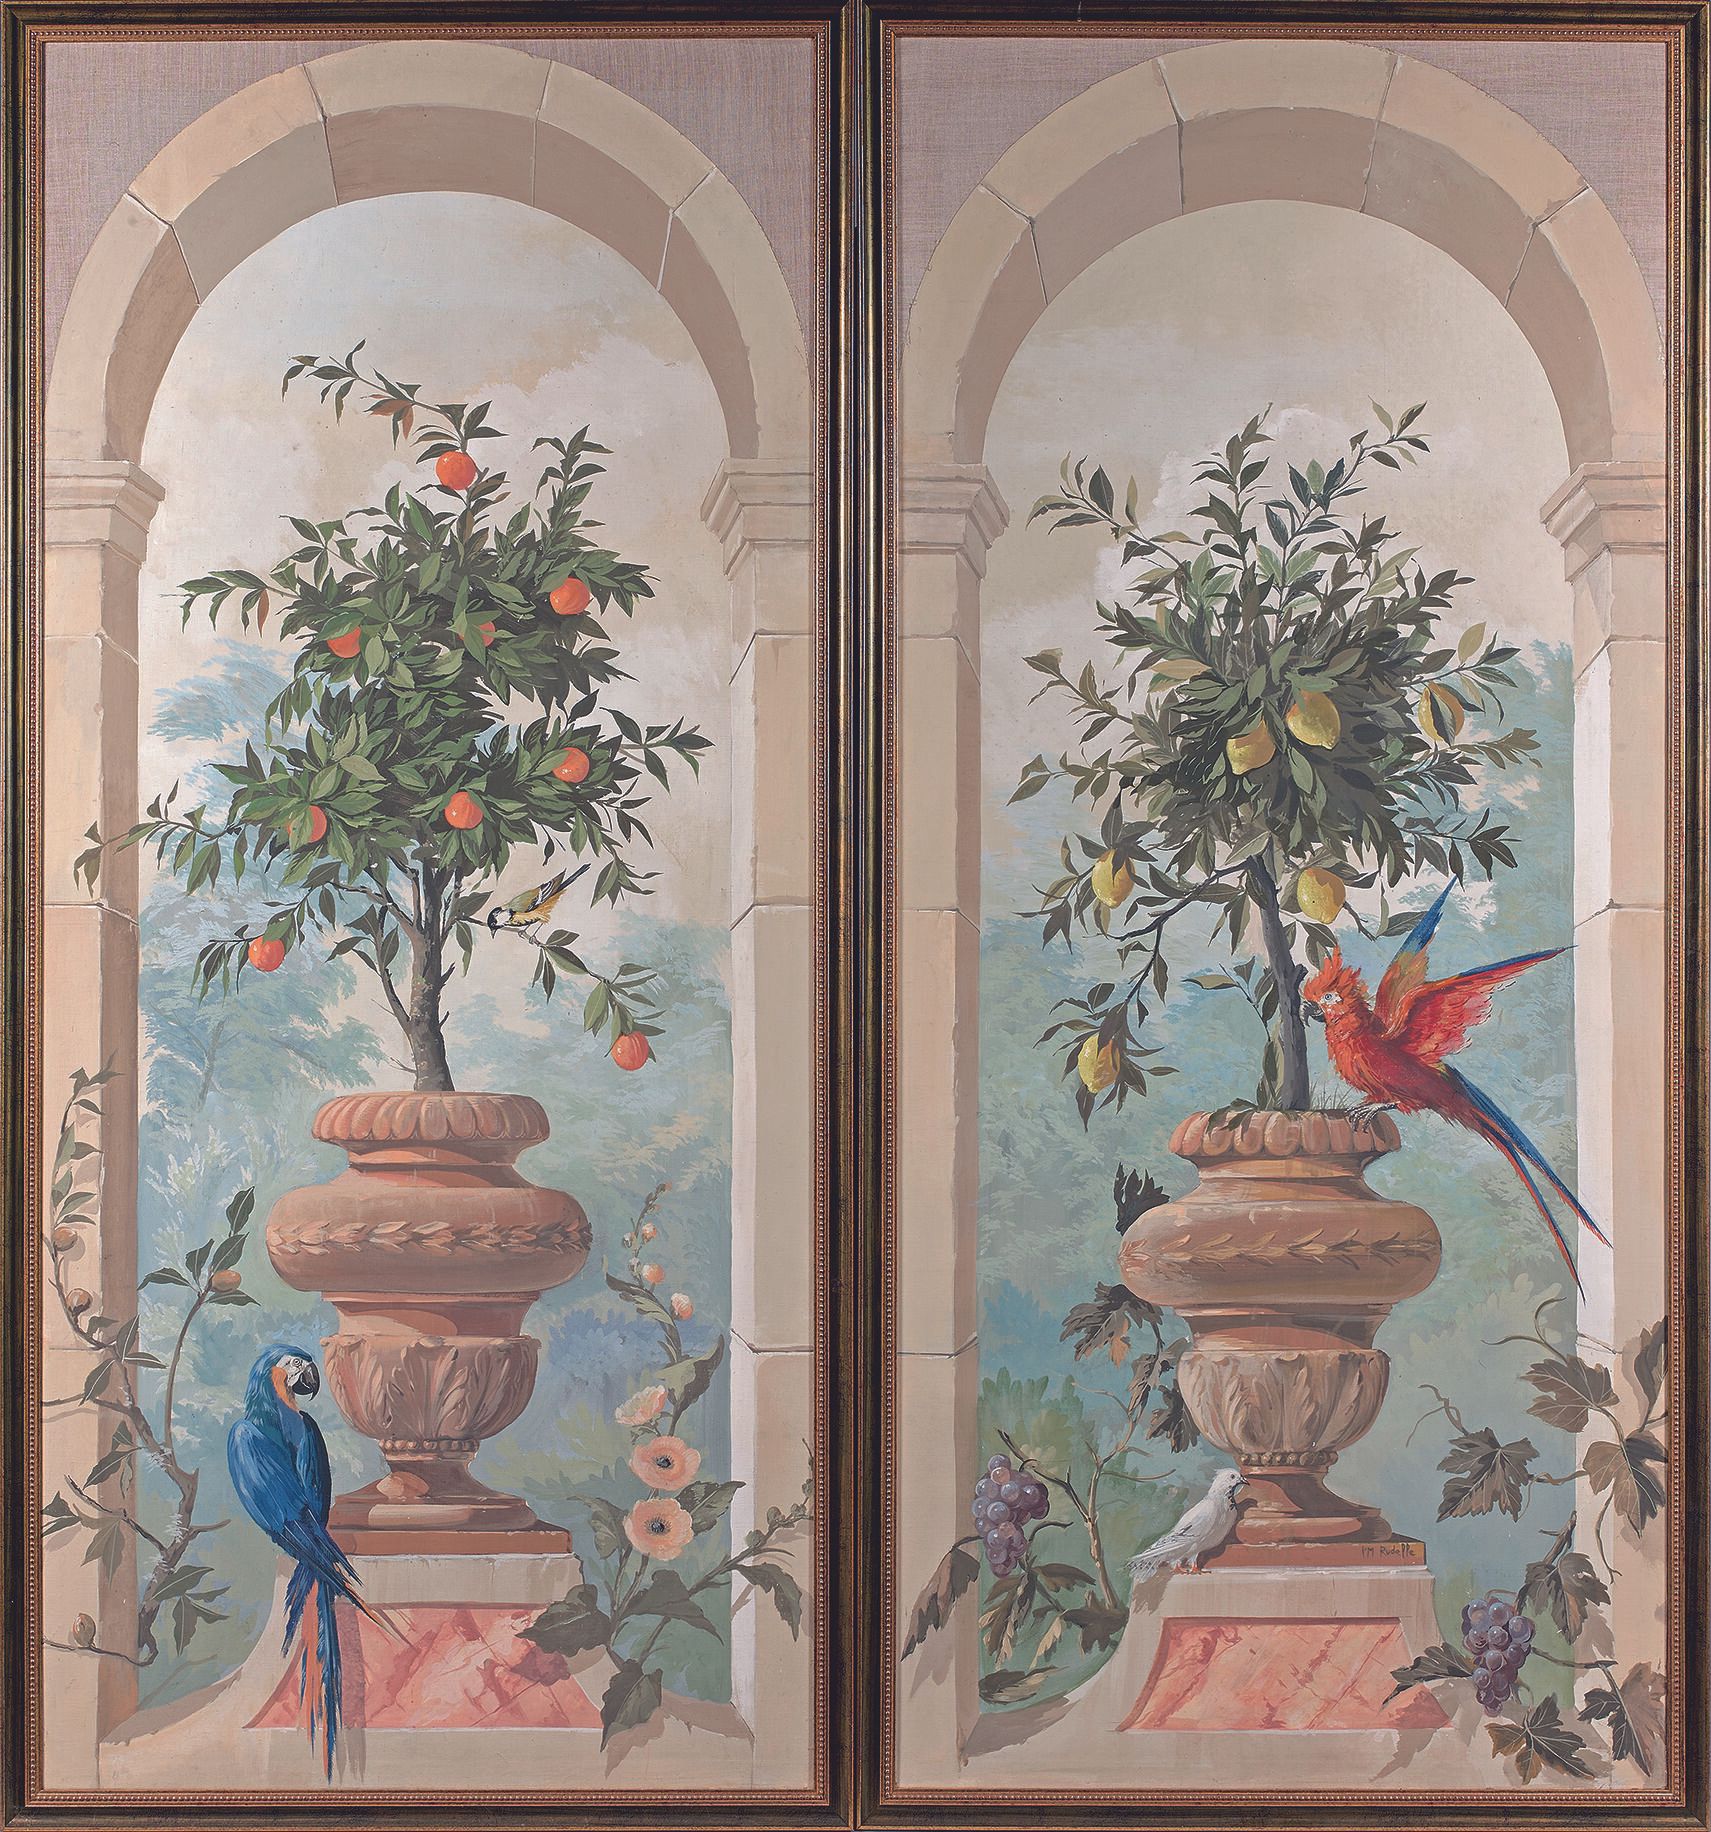 Null 现代学校
花瓶中的柑橘类水果和金刚鹦鹉
两幅布面油画。
196 x 87 cm